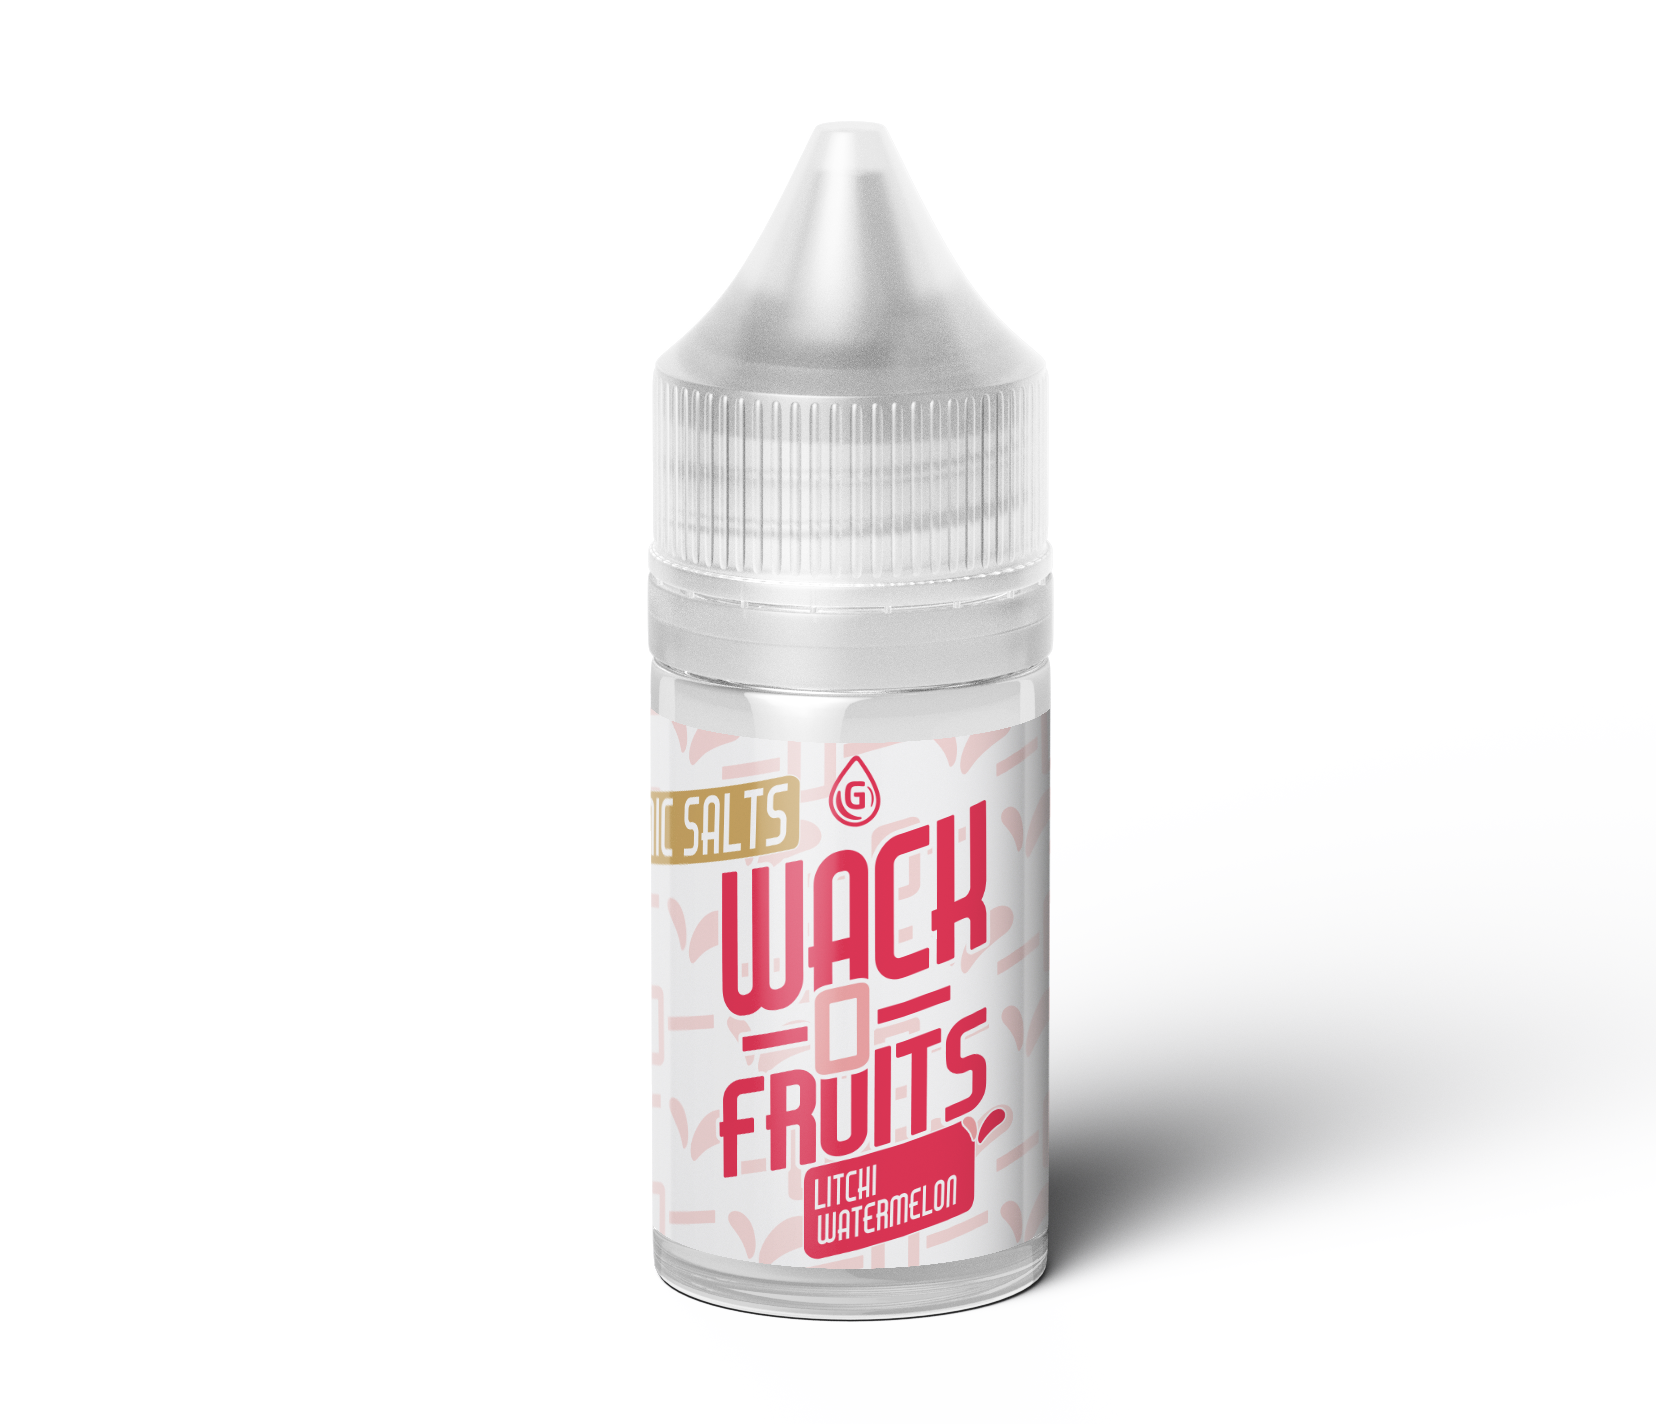 Wack O Fruits Salt Nic by G-Drops 30ml